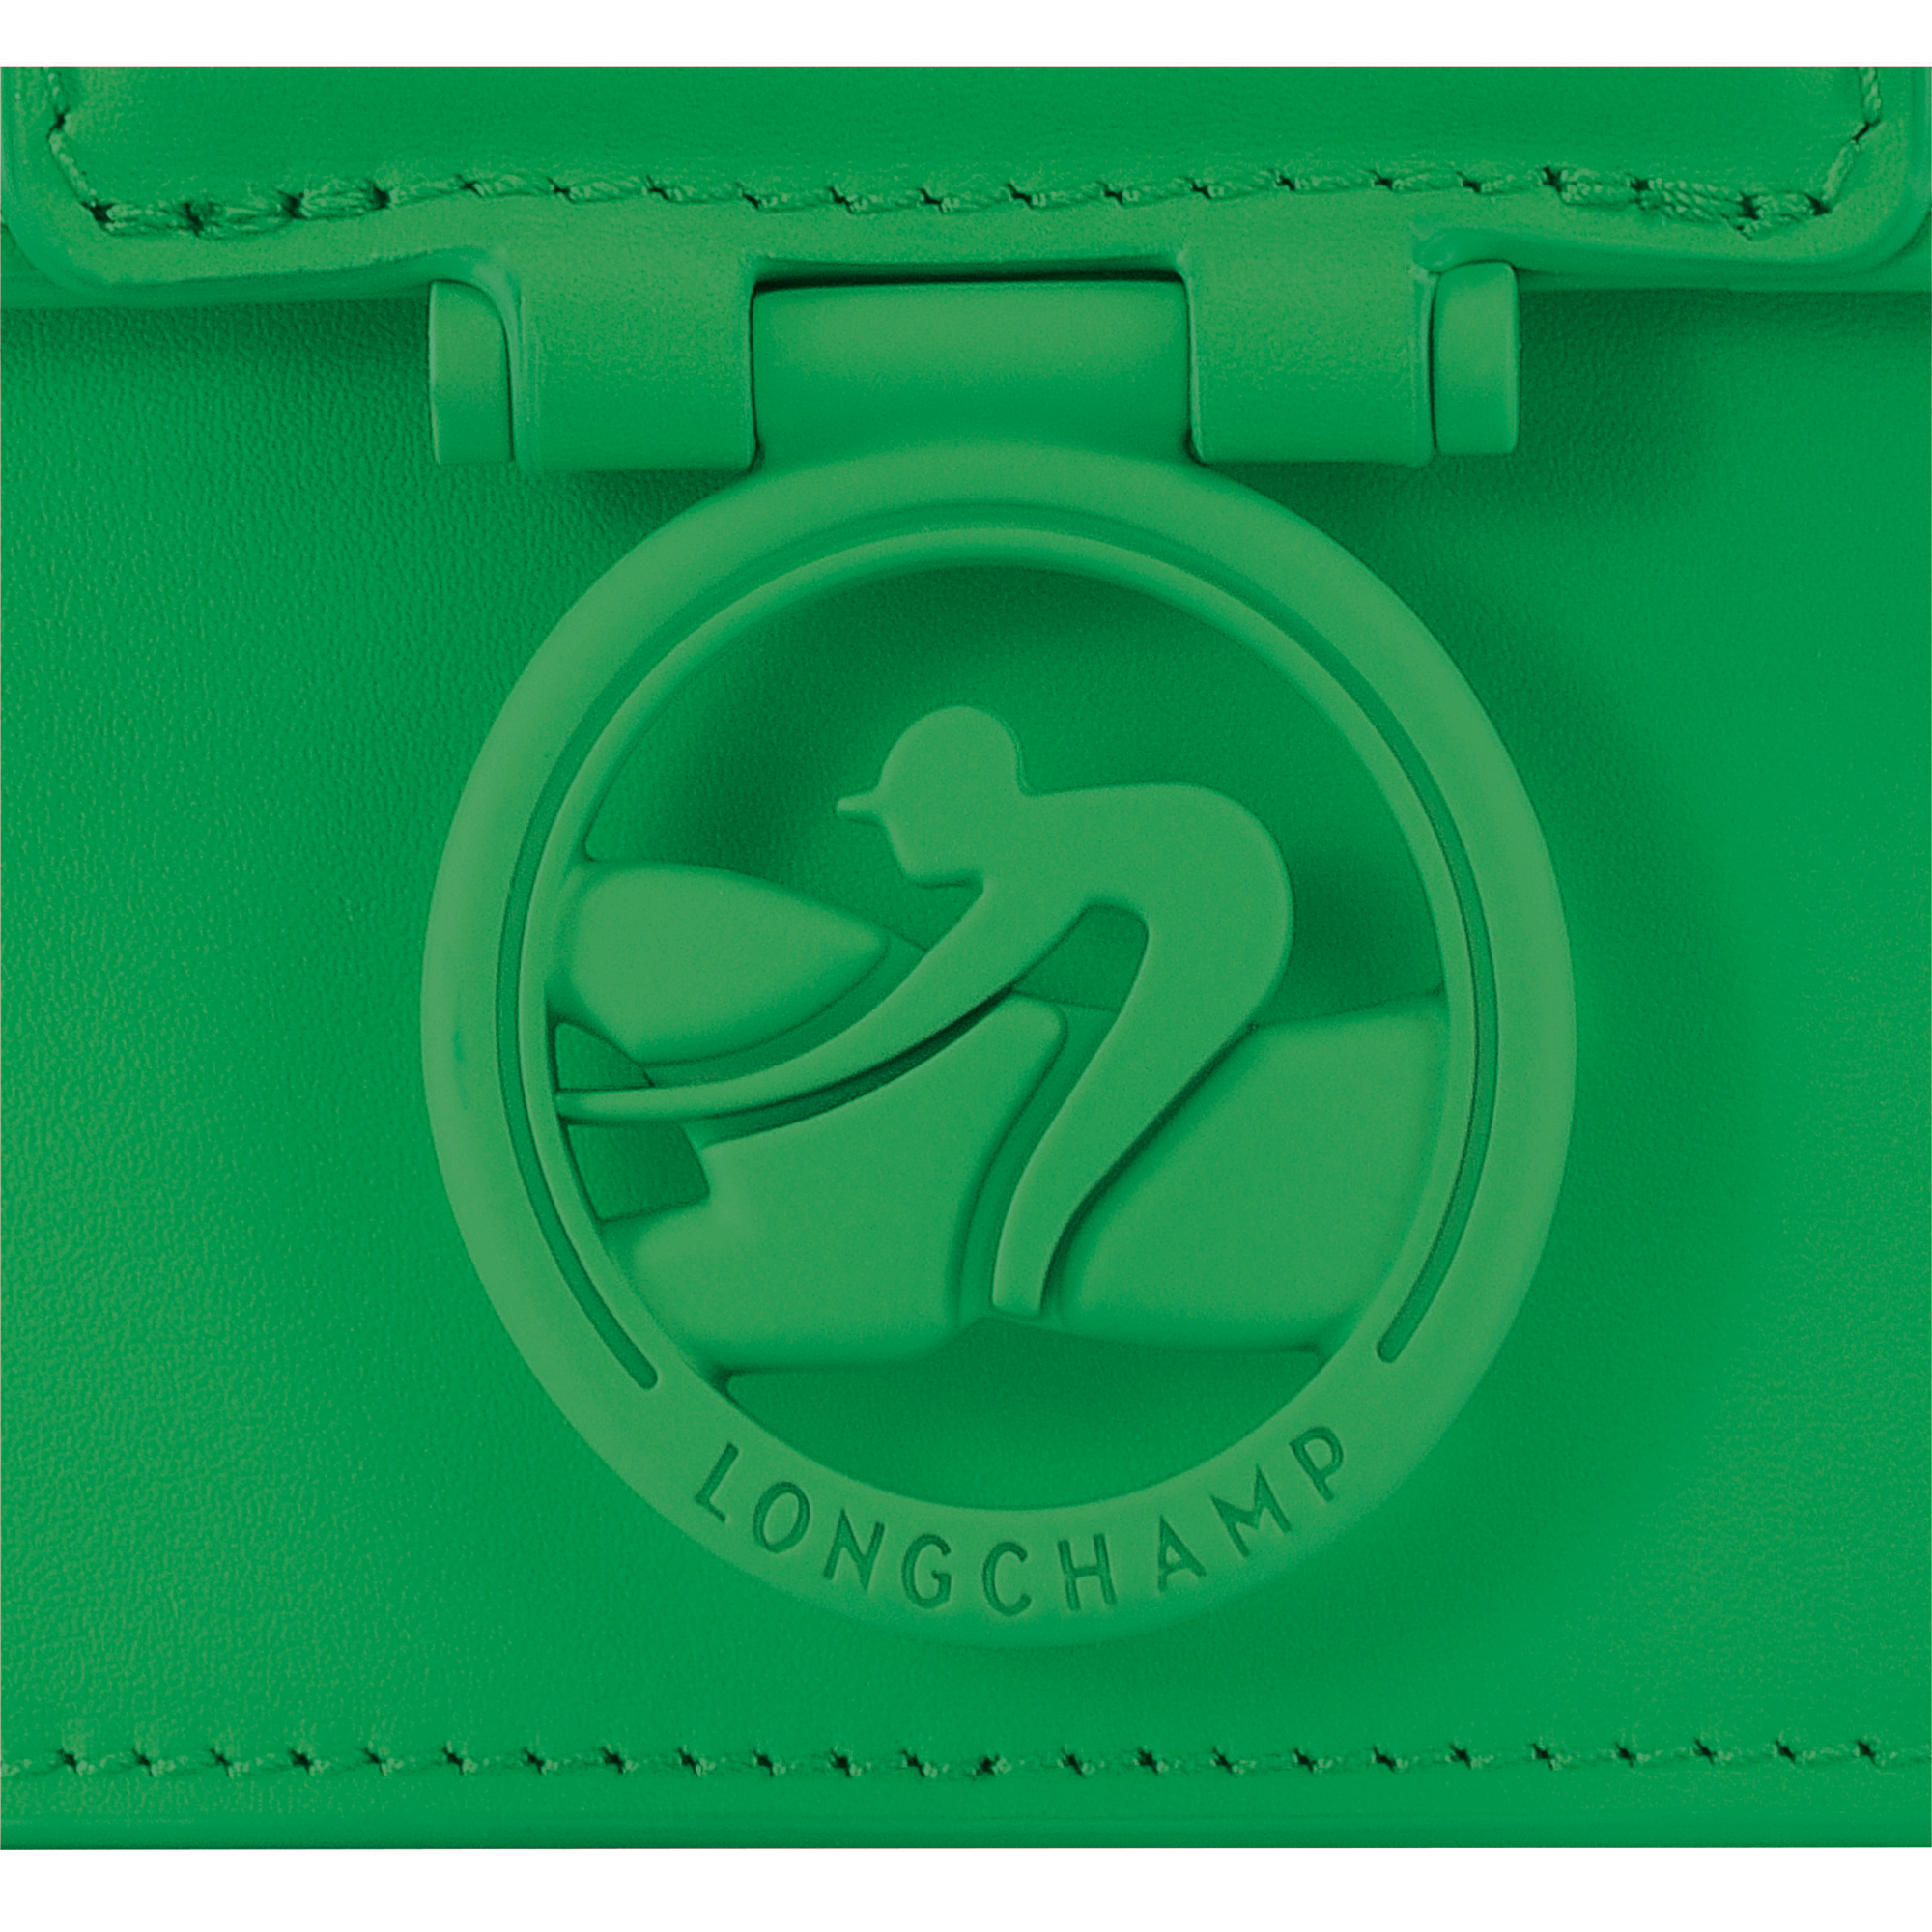 Box-Trot 斜揹袋 XS, 野草綠